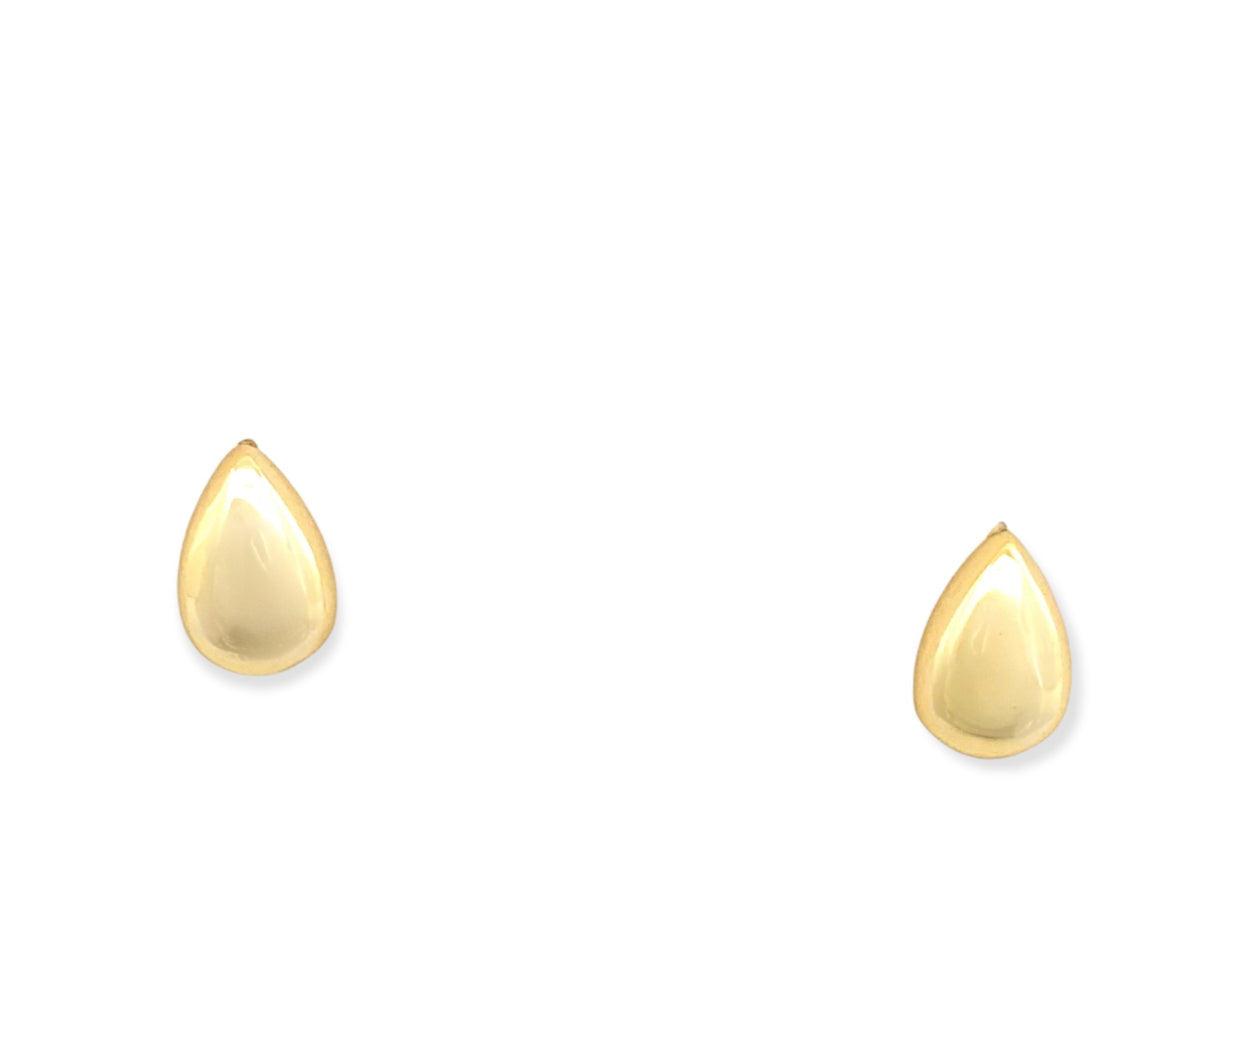 Tears of joy handmade earrings 18k gold plated sterling silver inamullumani 